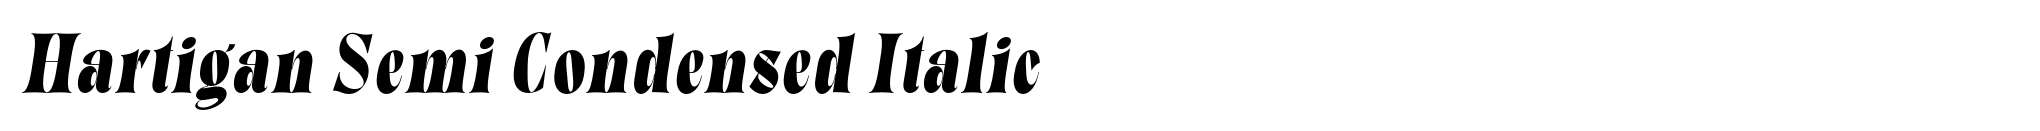 Hartigan Semi Condensed Italic image